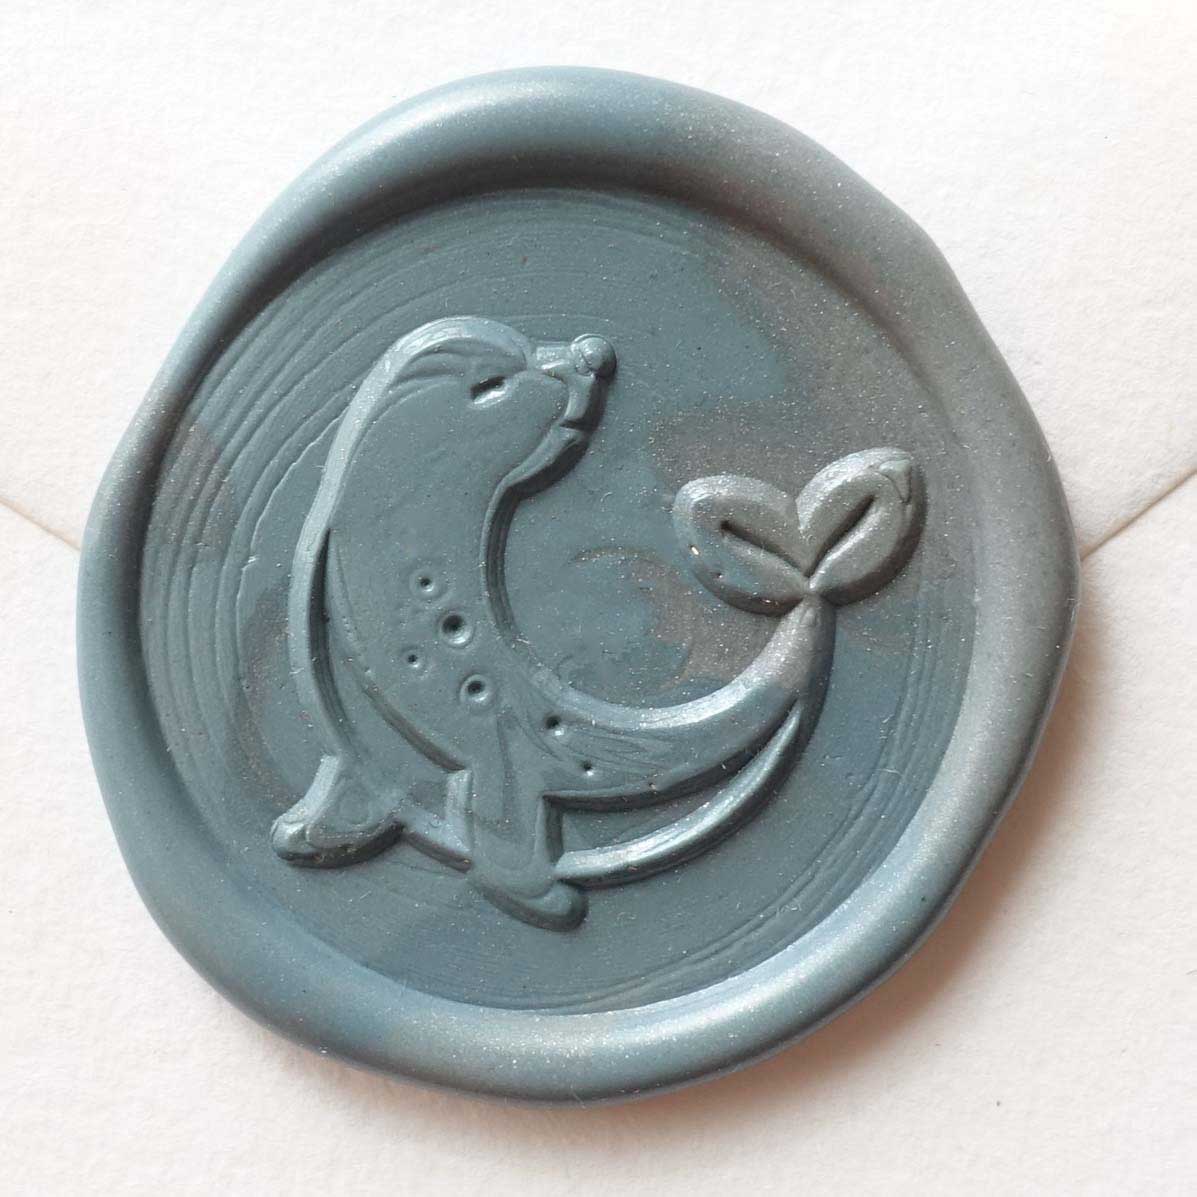 Seal pup animal cute gray wax seal stamp fiona ariva australia